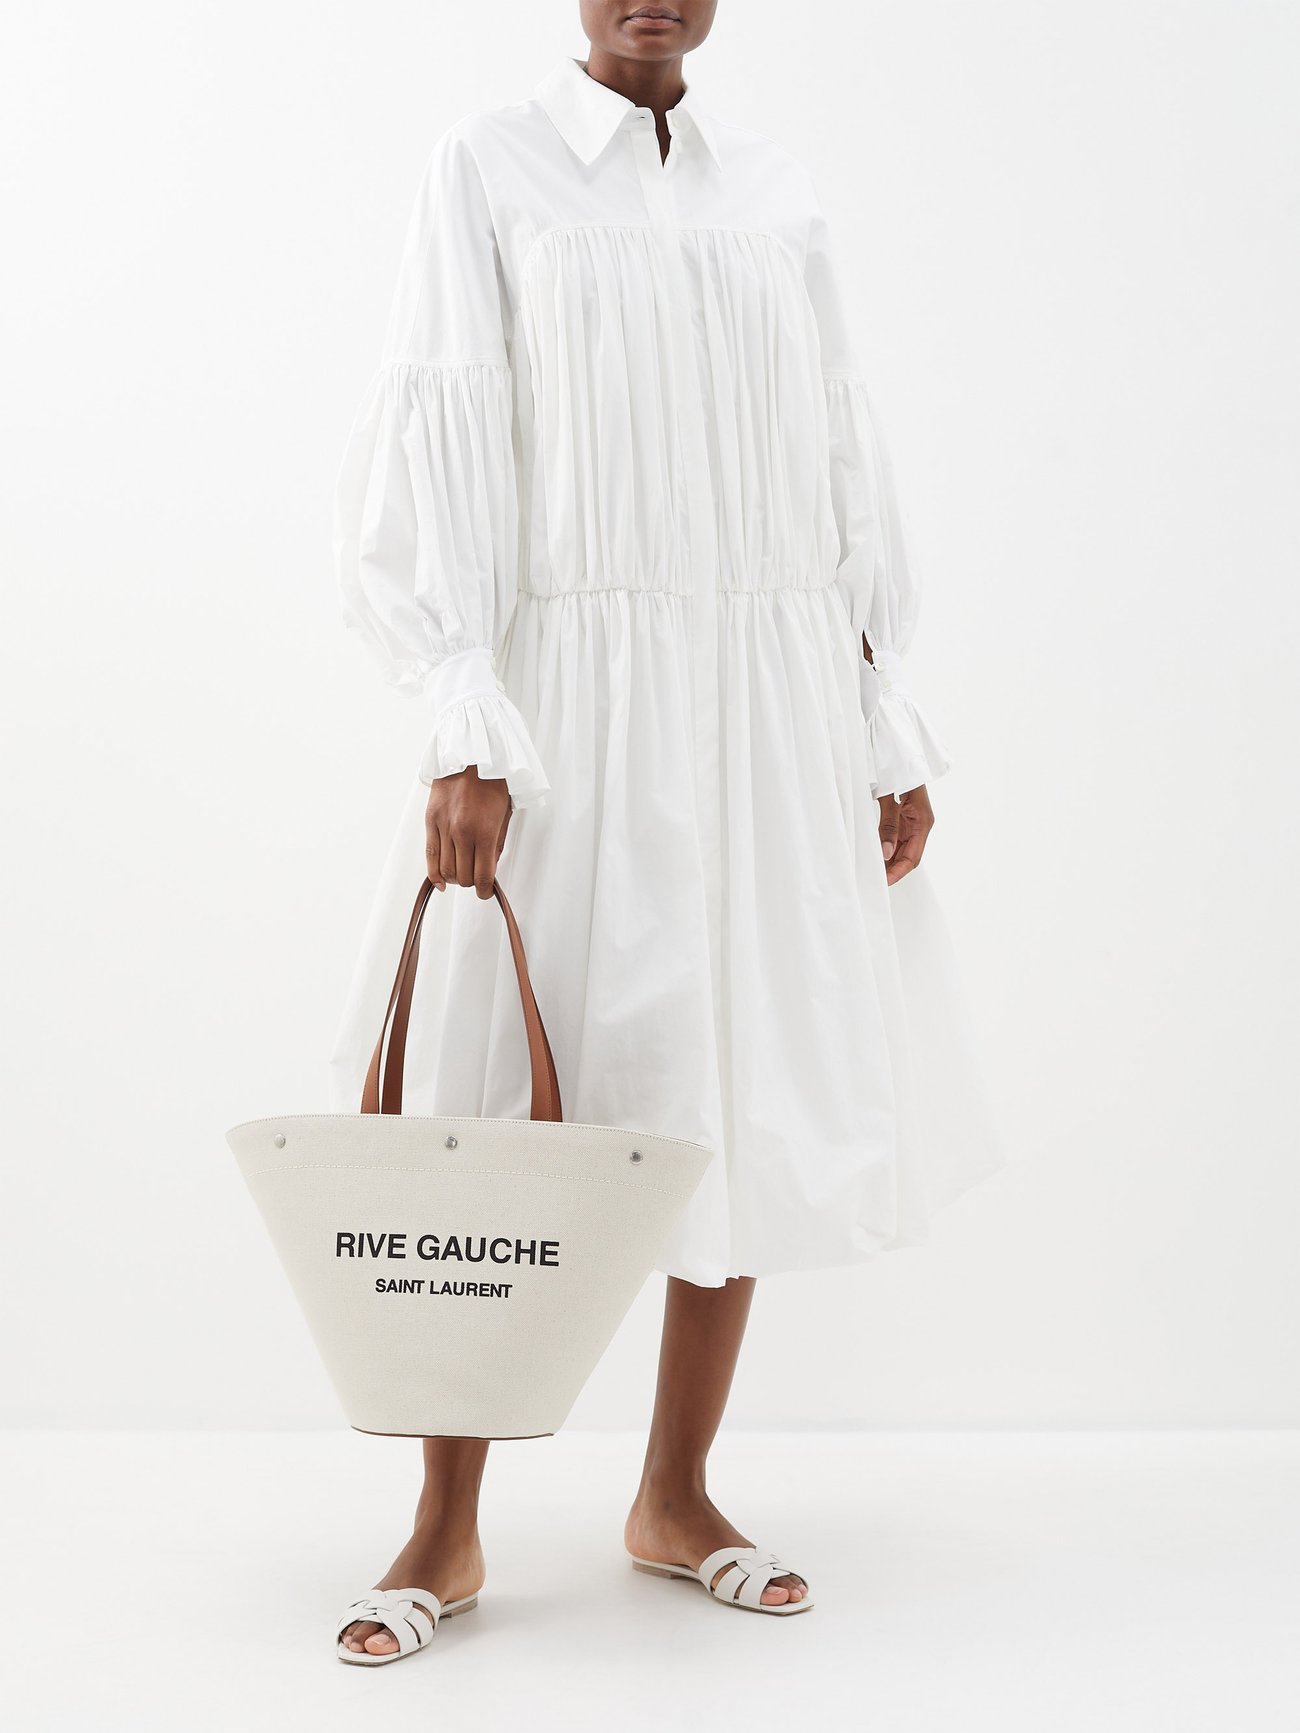 Saint Laurent Rive Gauche Leather-trim Canvas Tote Bag in White